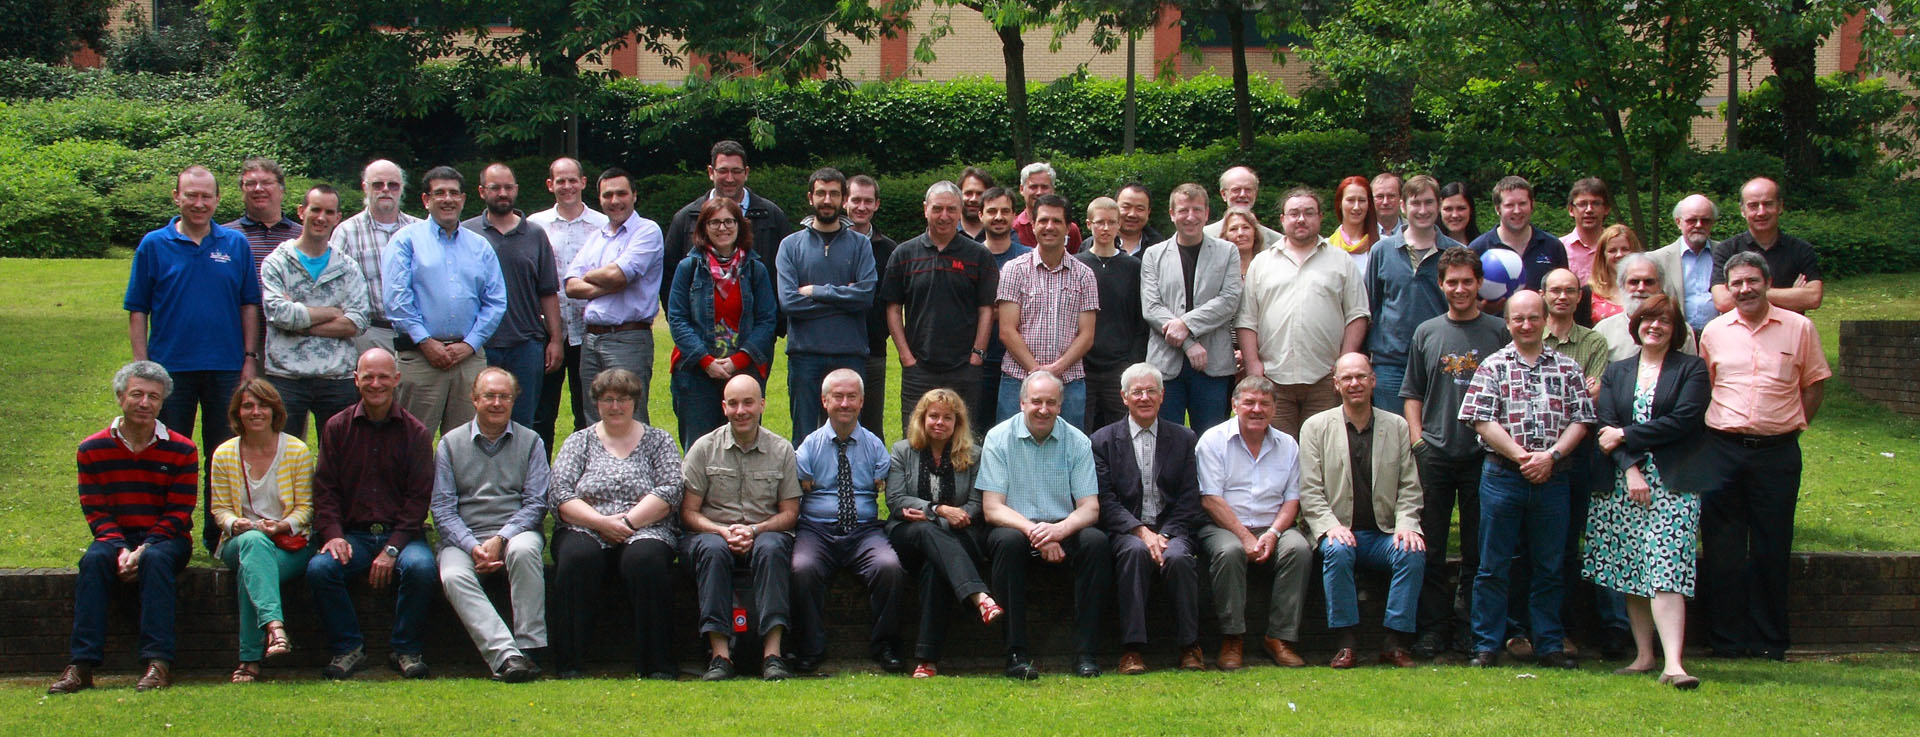 Part of the SPIRE consortium in Cardiff in June 2013